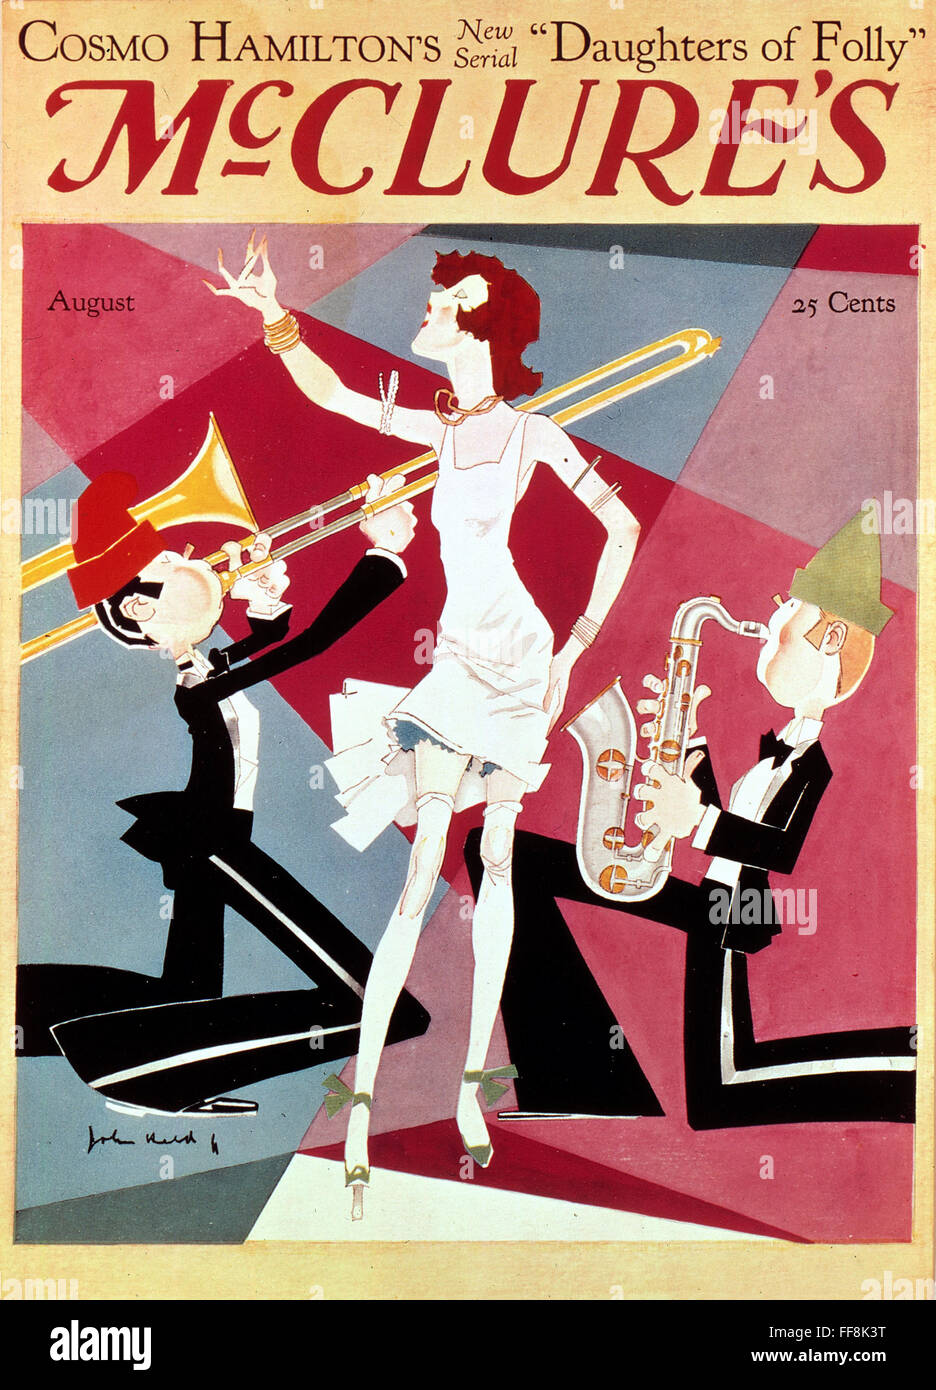 THE ROARING TWENTIES. /nThe 'Roaring Twenties' captured by John Held Jr. in a contemporary American magazine cover. Stock Photo